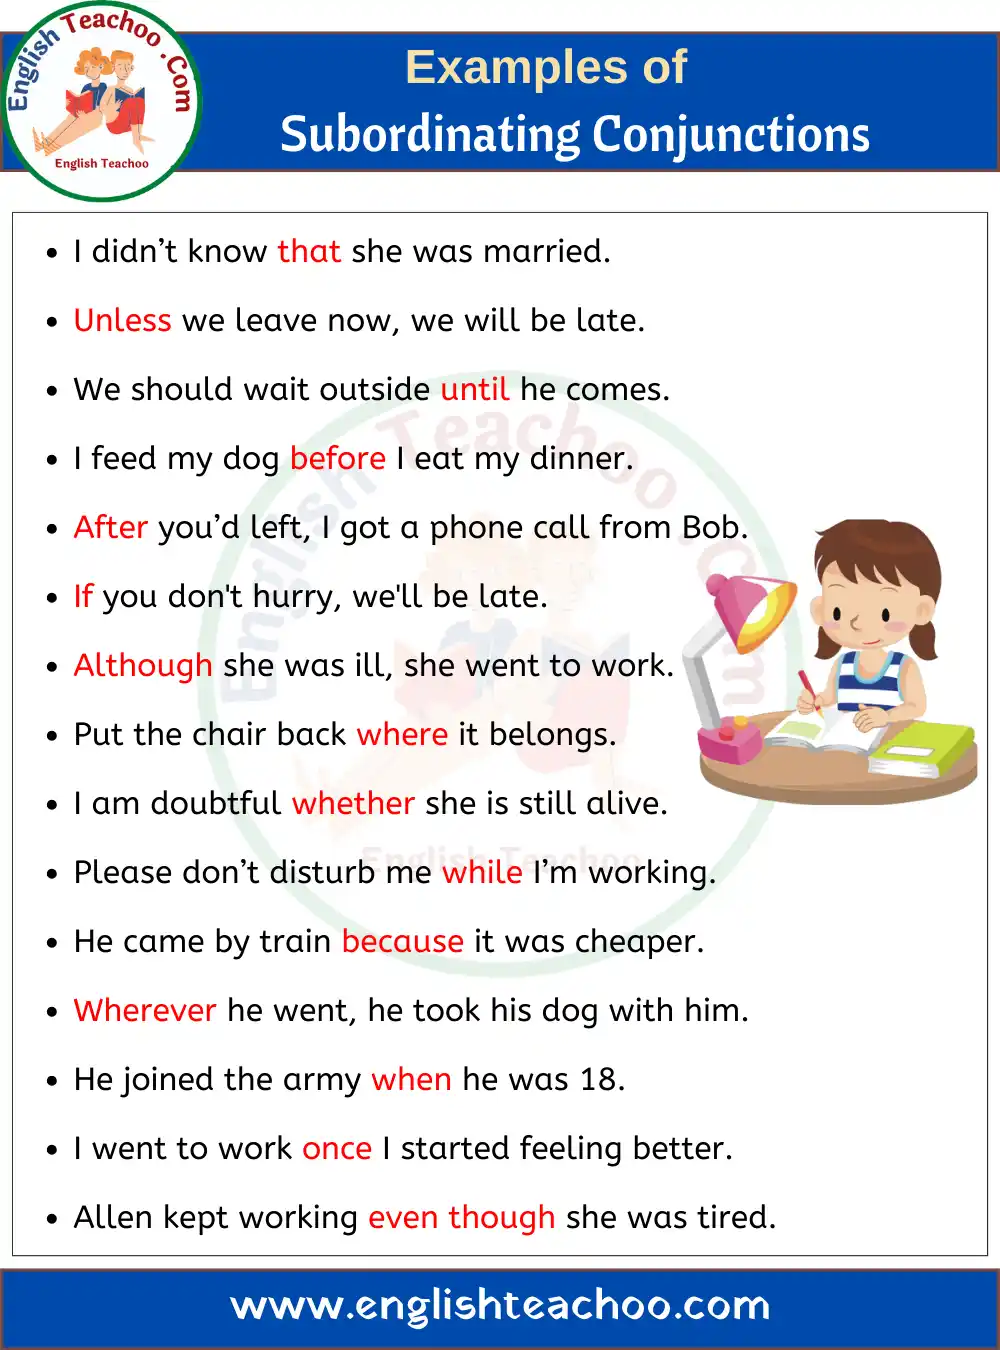 15-examples-of-subordinating-conjunctions-englishteachoo